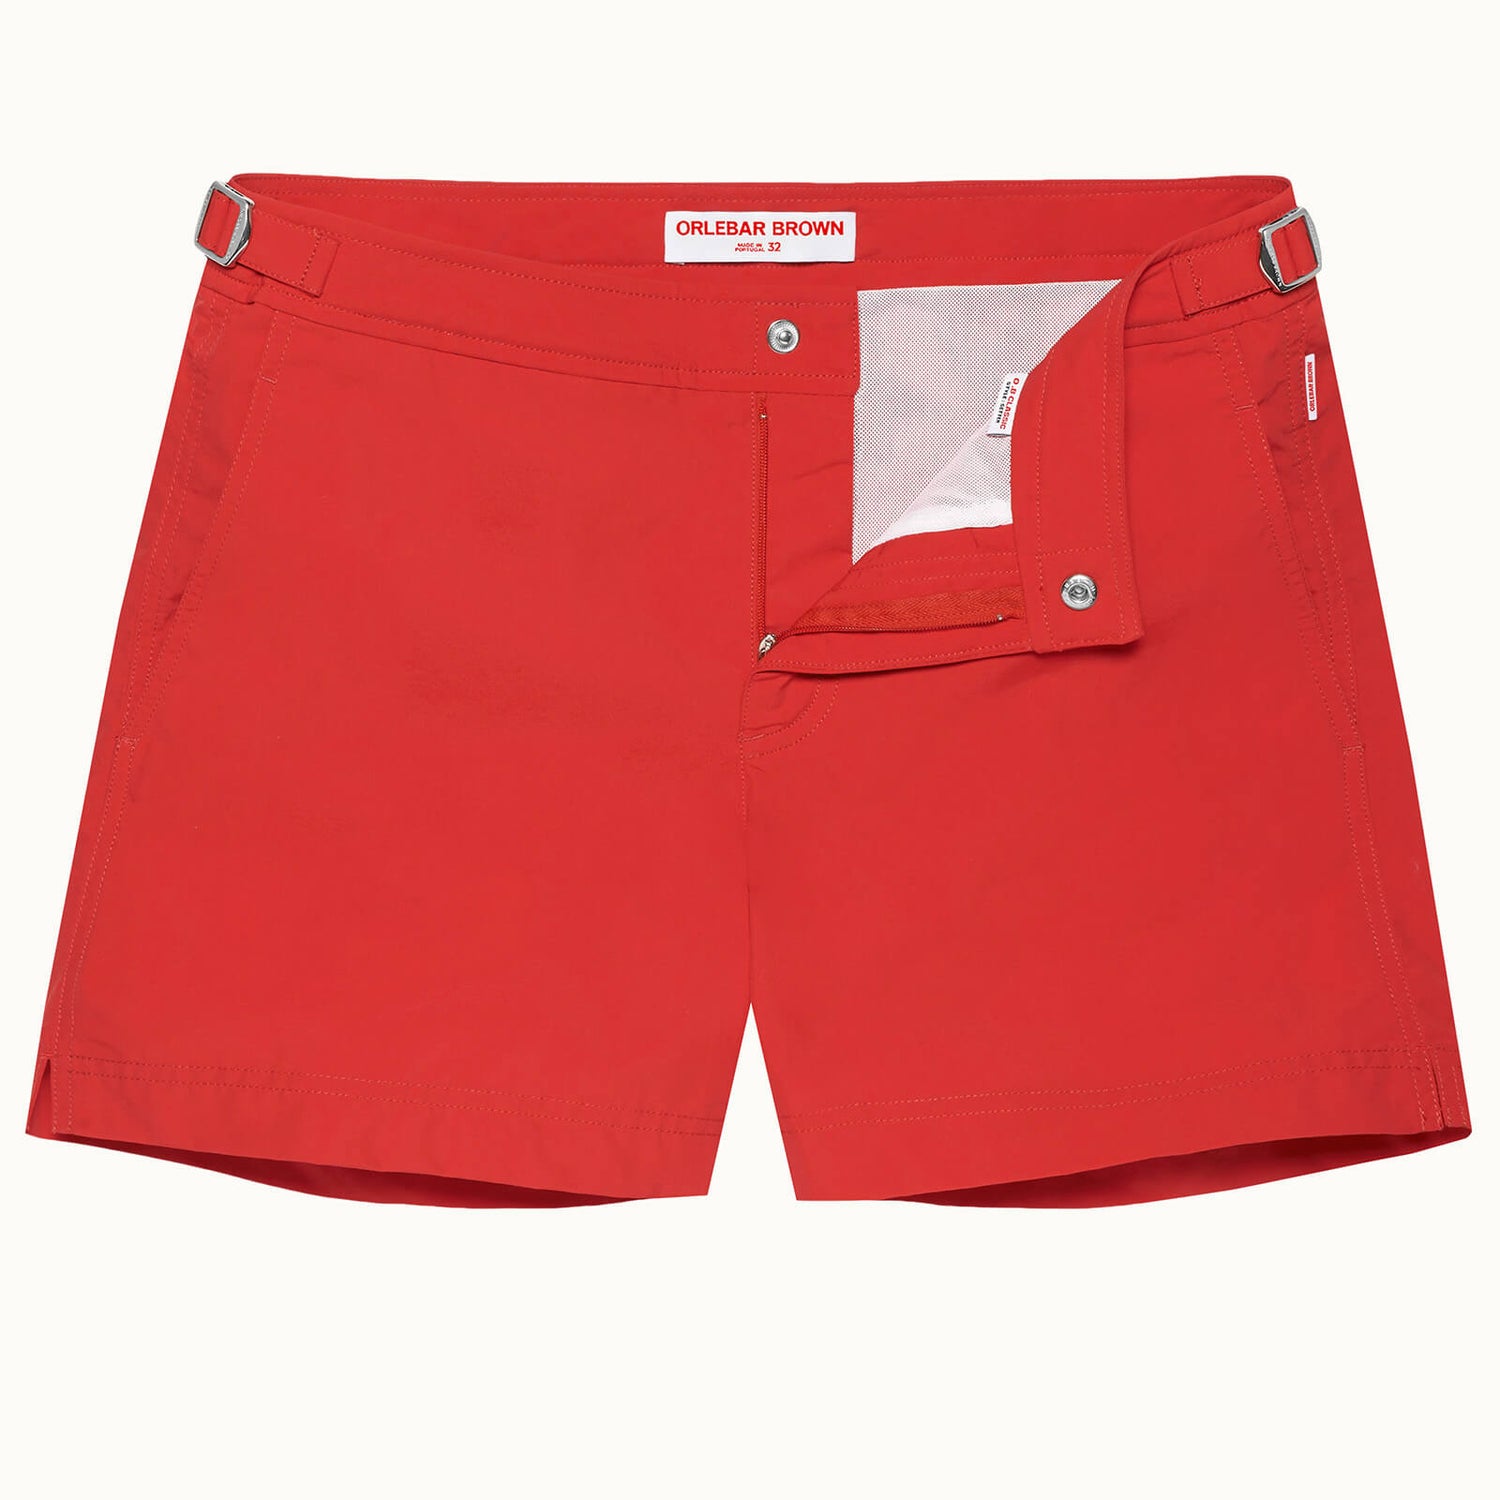 Setter 系列短款游泳短裤 - 红色 (Rescue Red)